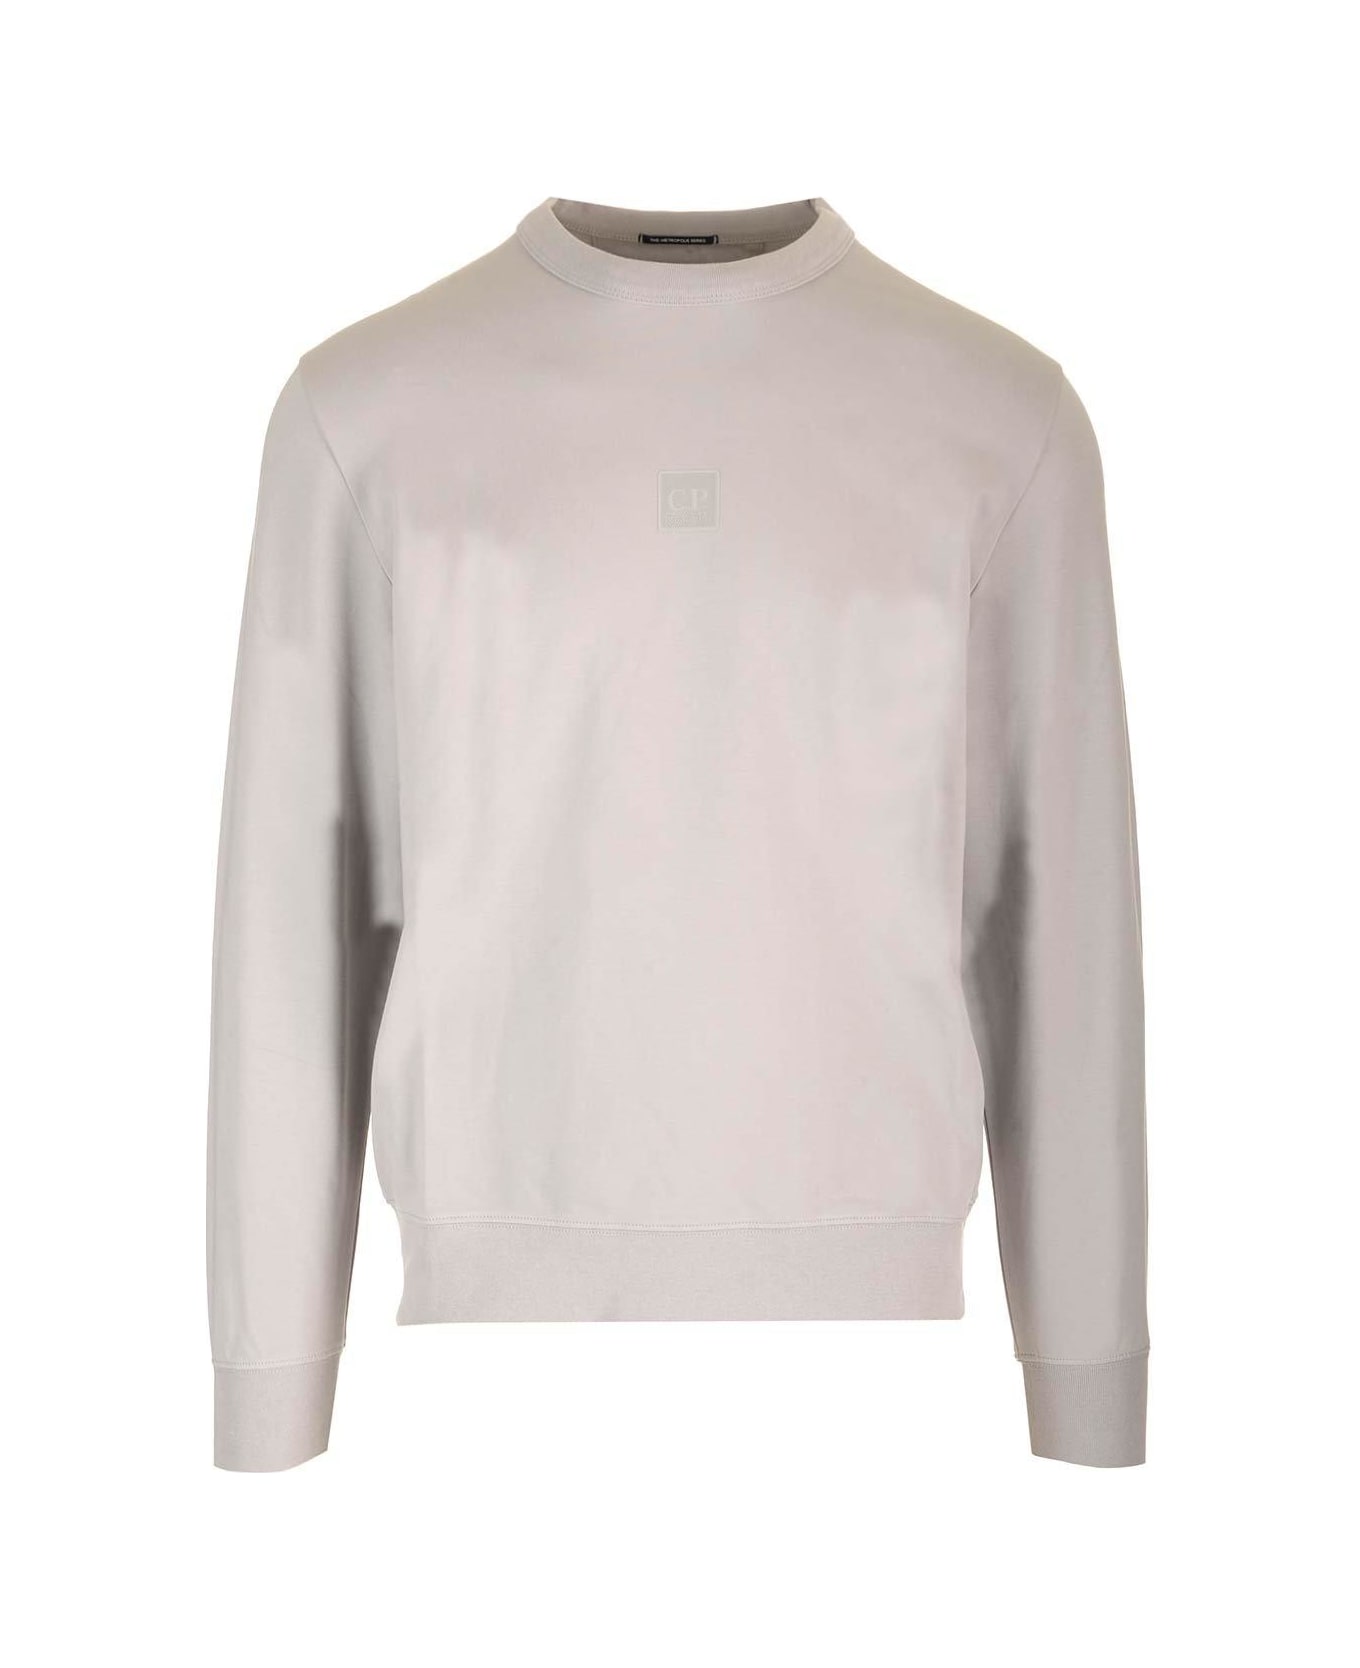 C.P. Company Stretch Fleece Long-sleeved Sweatshirt - Grey